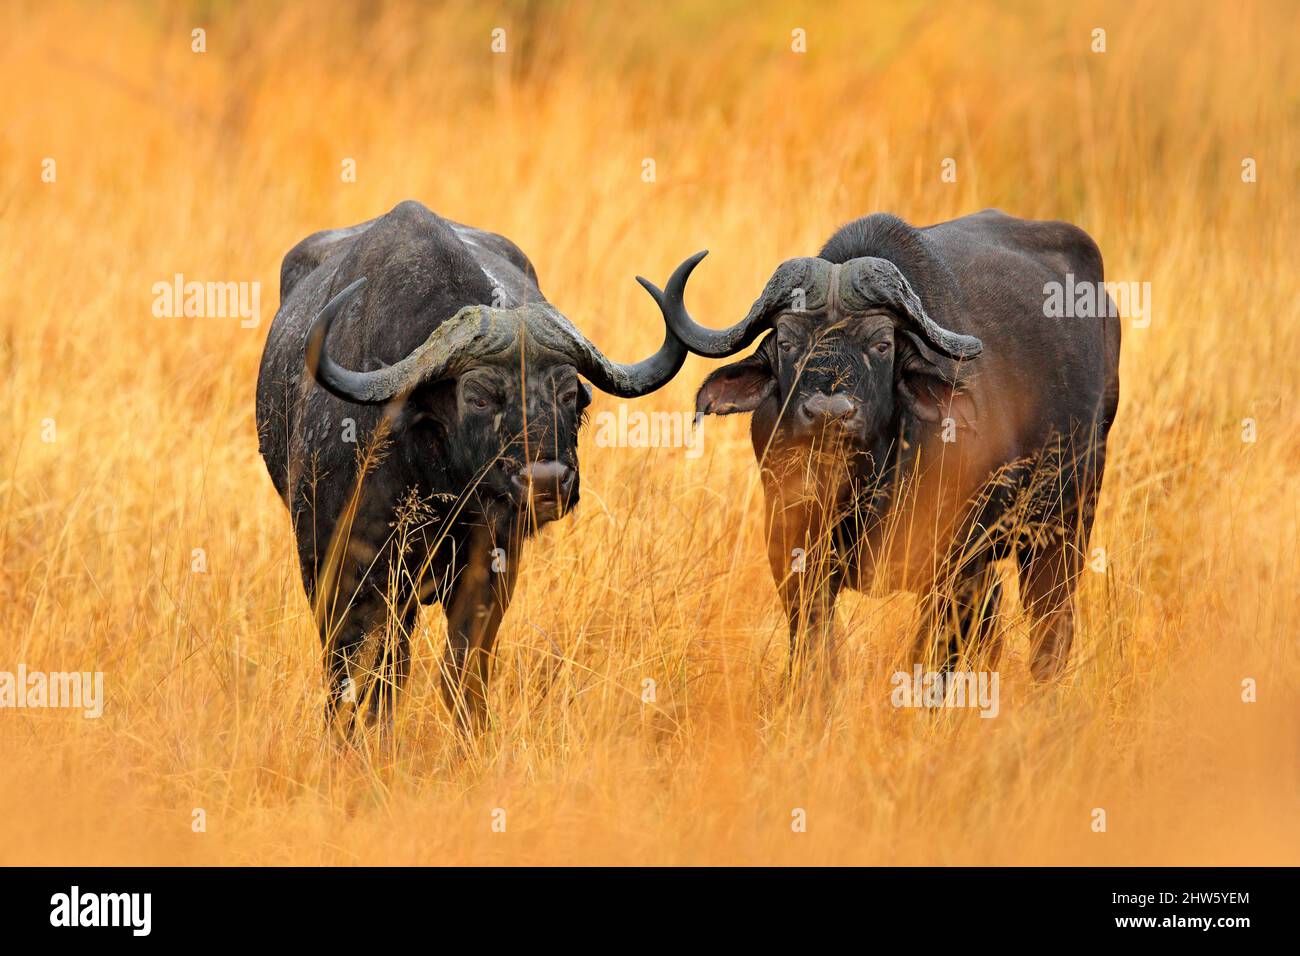 African Buffalo, Cyncerus cafer, standing savannah with yellow grass, Moremi, Okavango delta, Botswana. Wildlife scene from Africa nature. Big animal Stock Photo